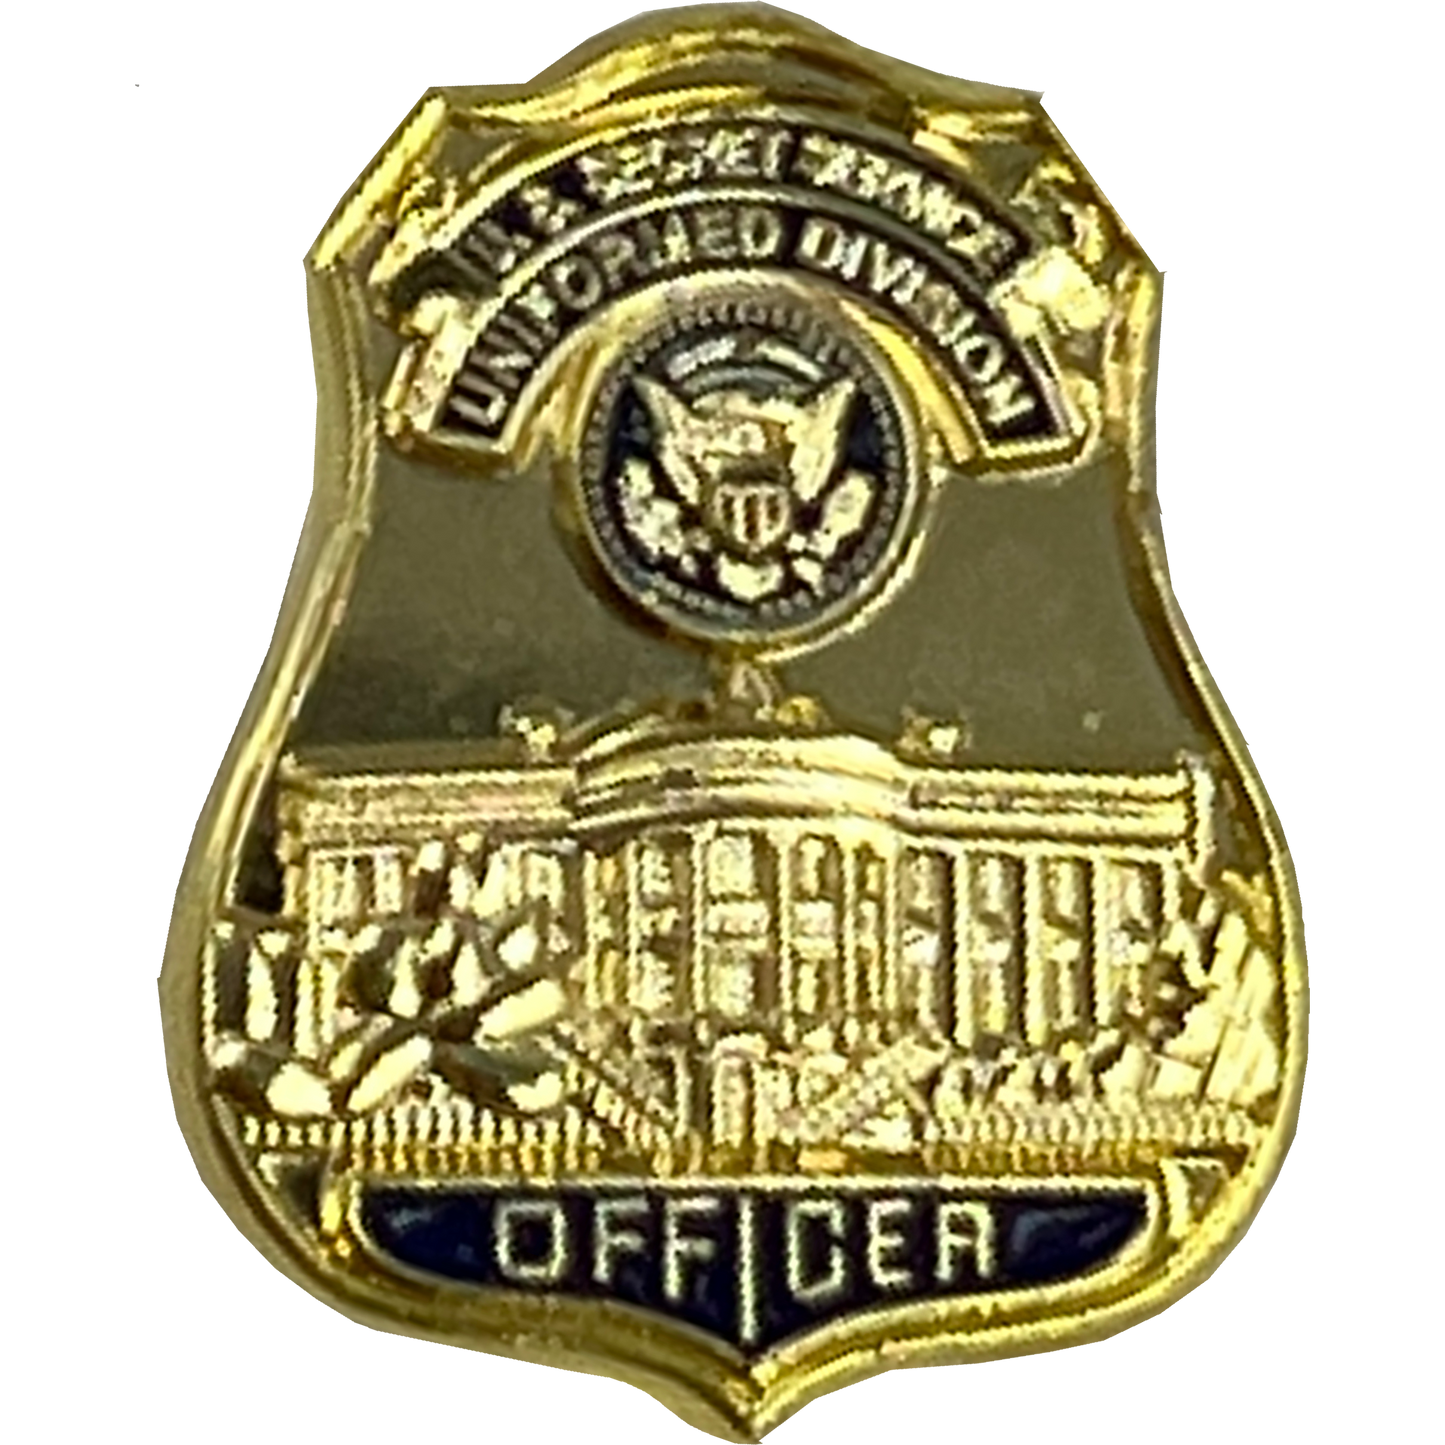 PBX-004-D USSS US Secret Service Uniformed Division Officer Lapel Pin